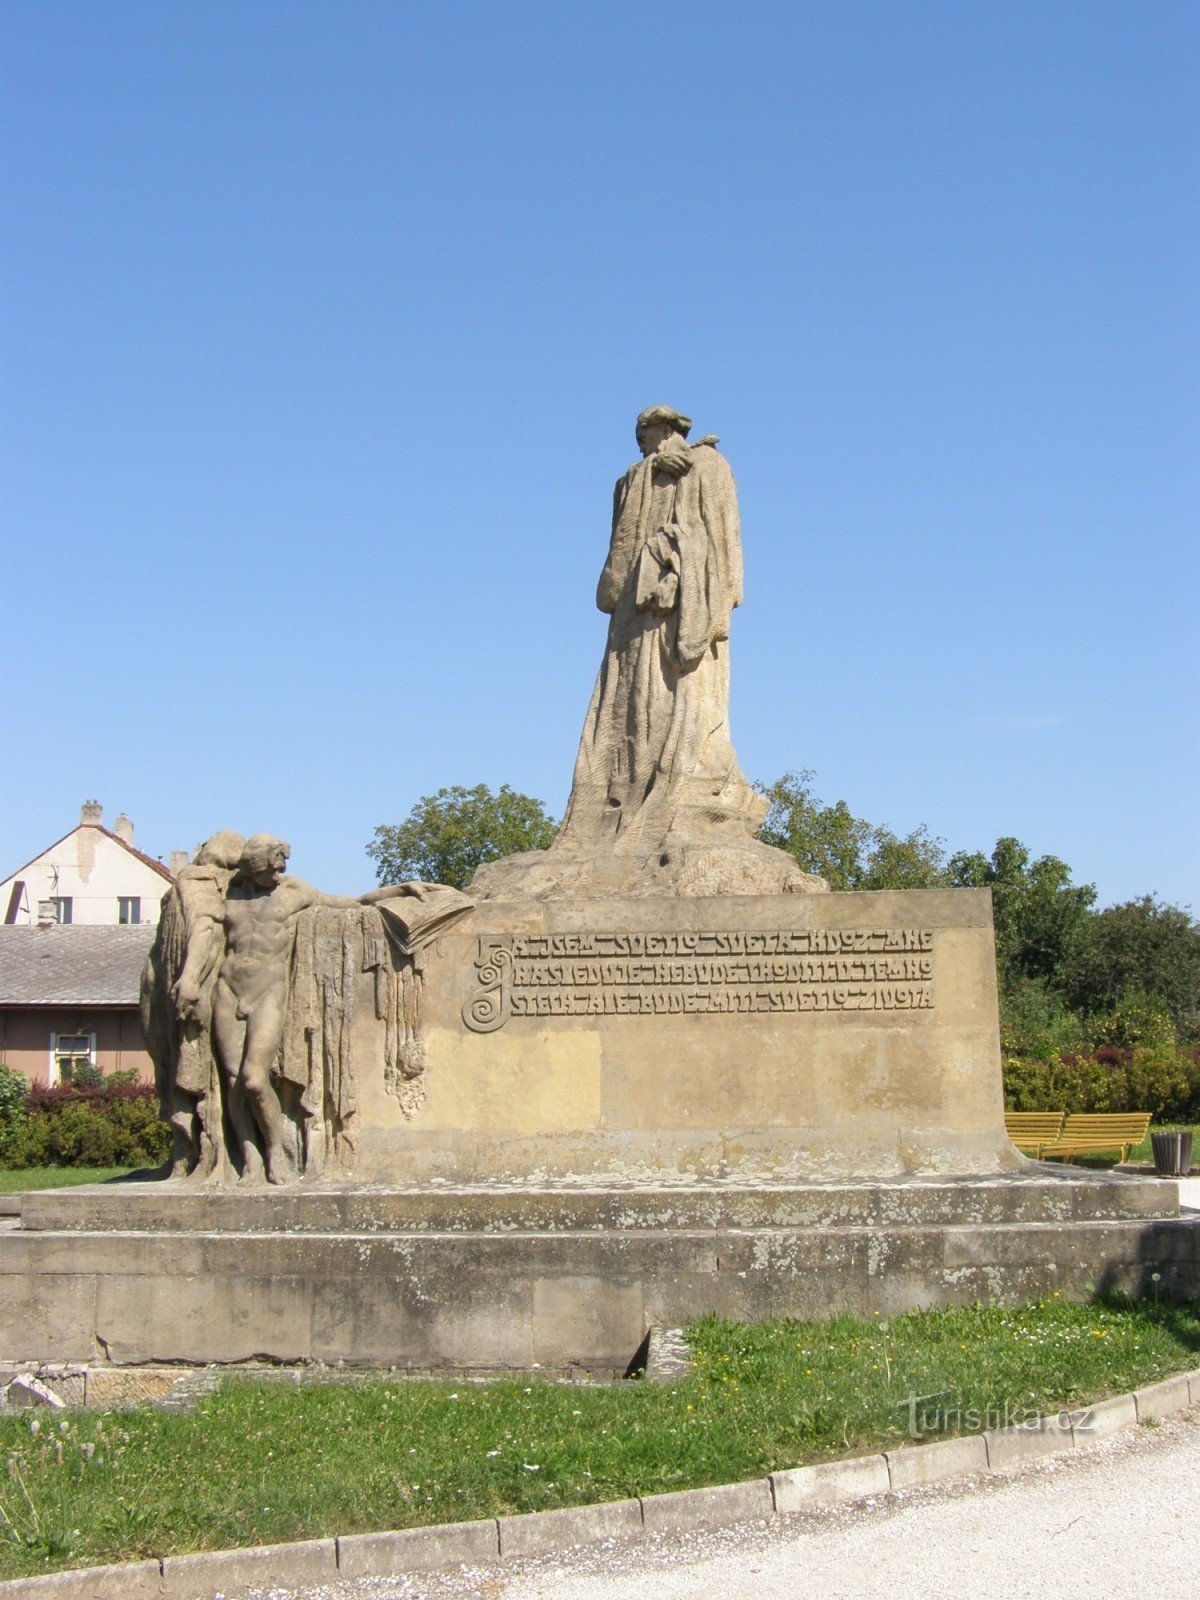 Hořice – pomnik mistrza Jana Husa